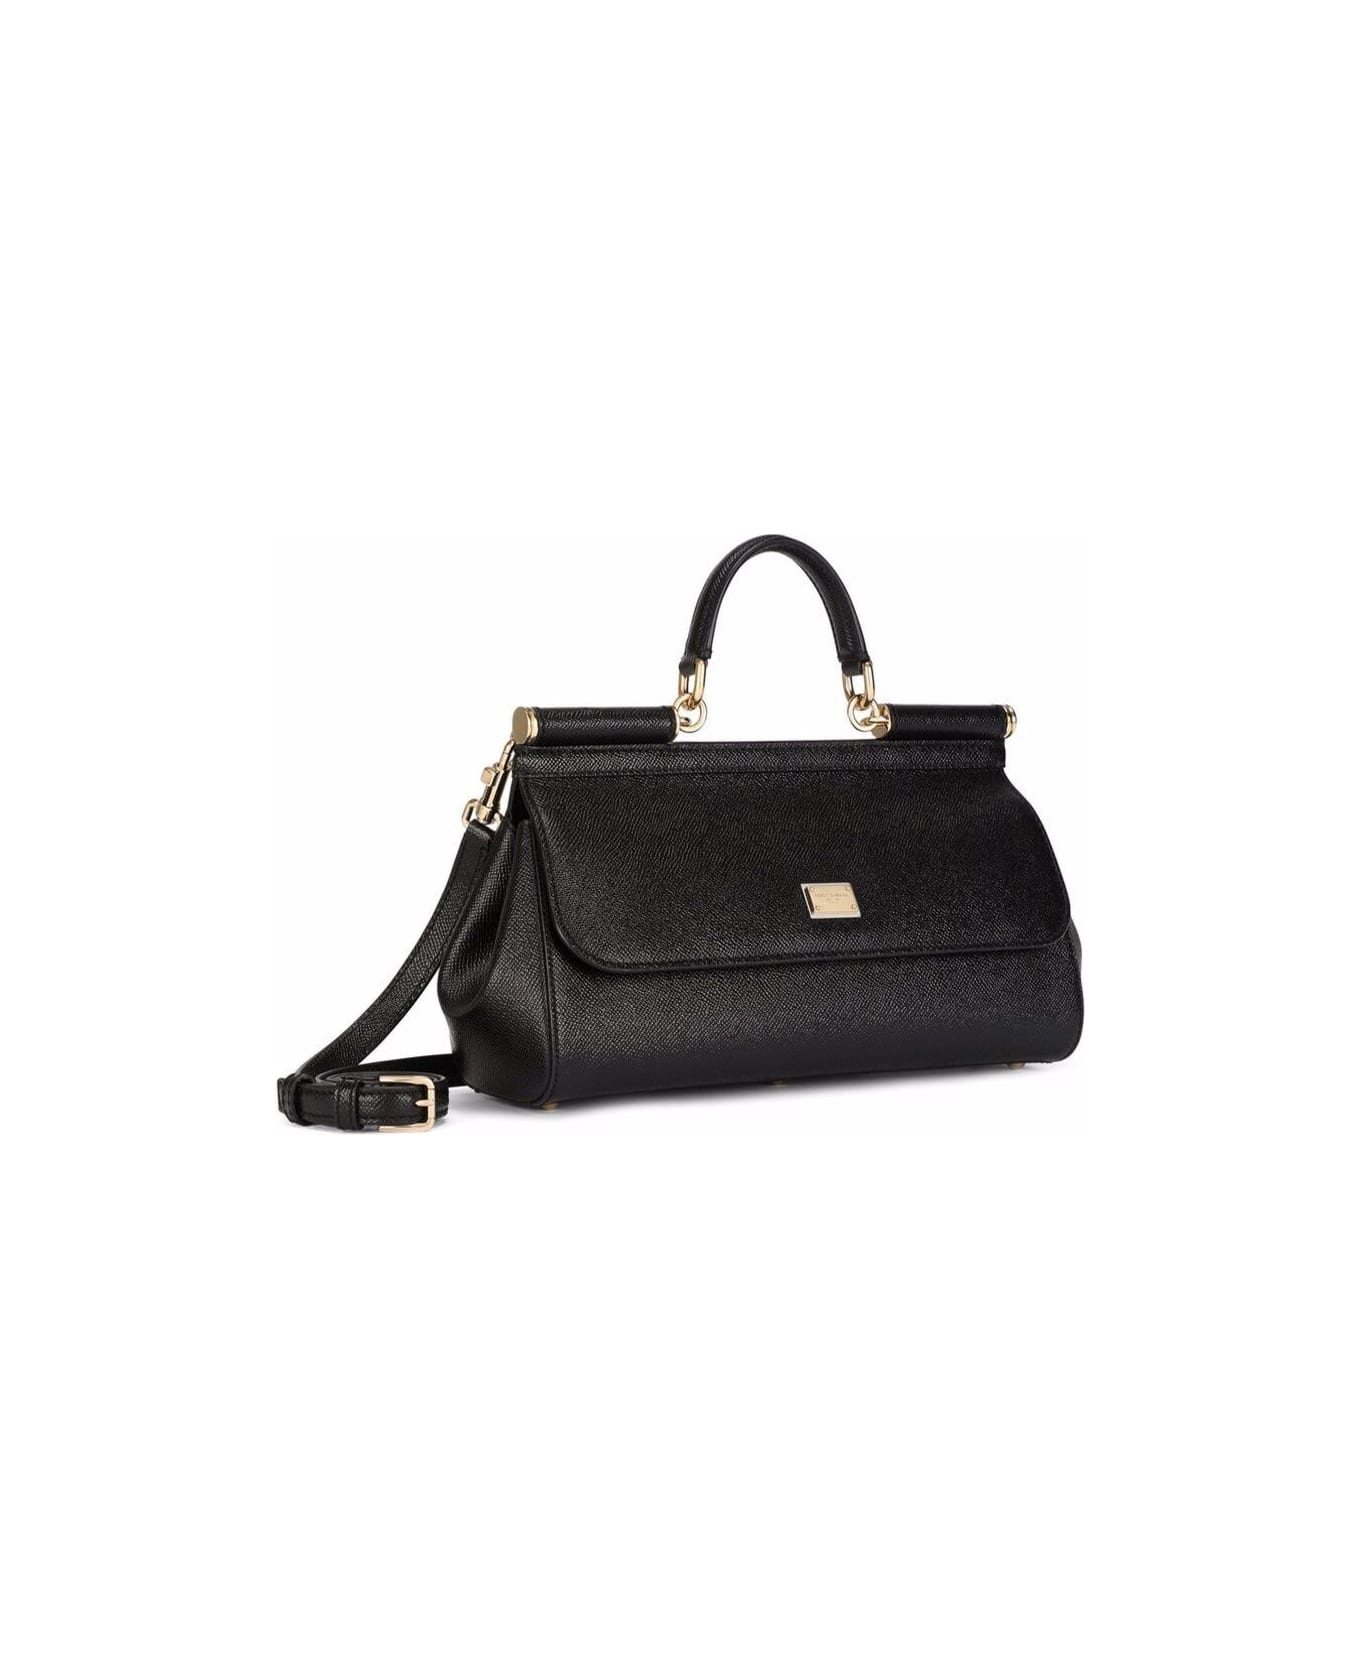 Dolce & Gabbana 'medium Sicily' Black Handbag With Branded Galvanic Plaque In Dauphine Leather Woman - Black